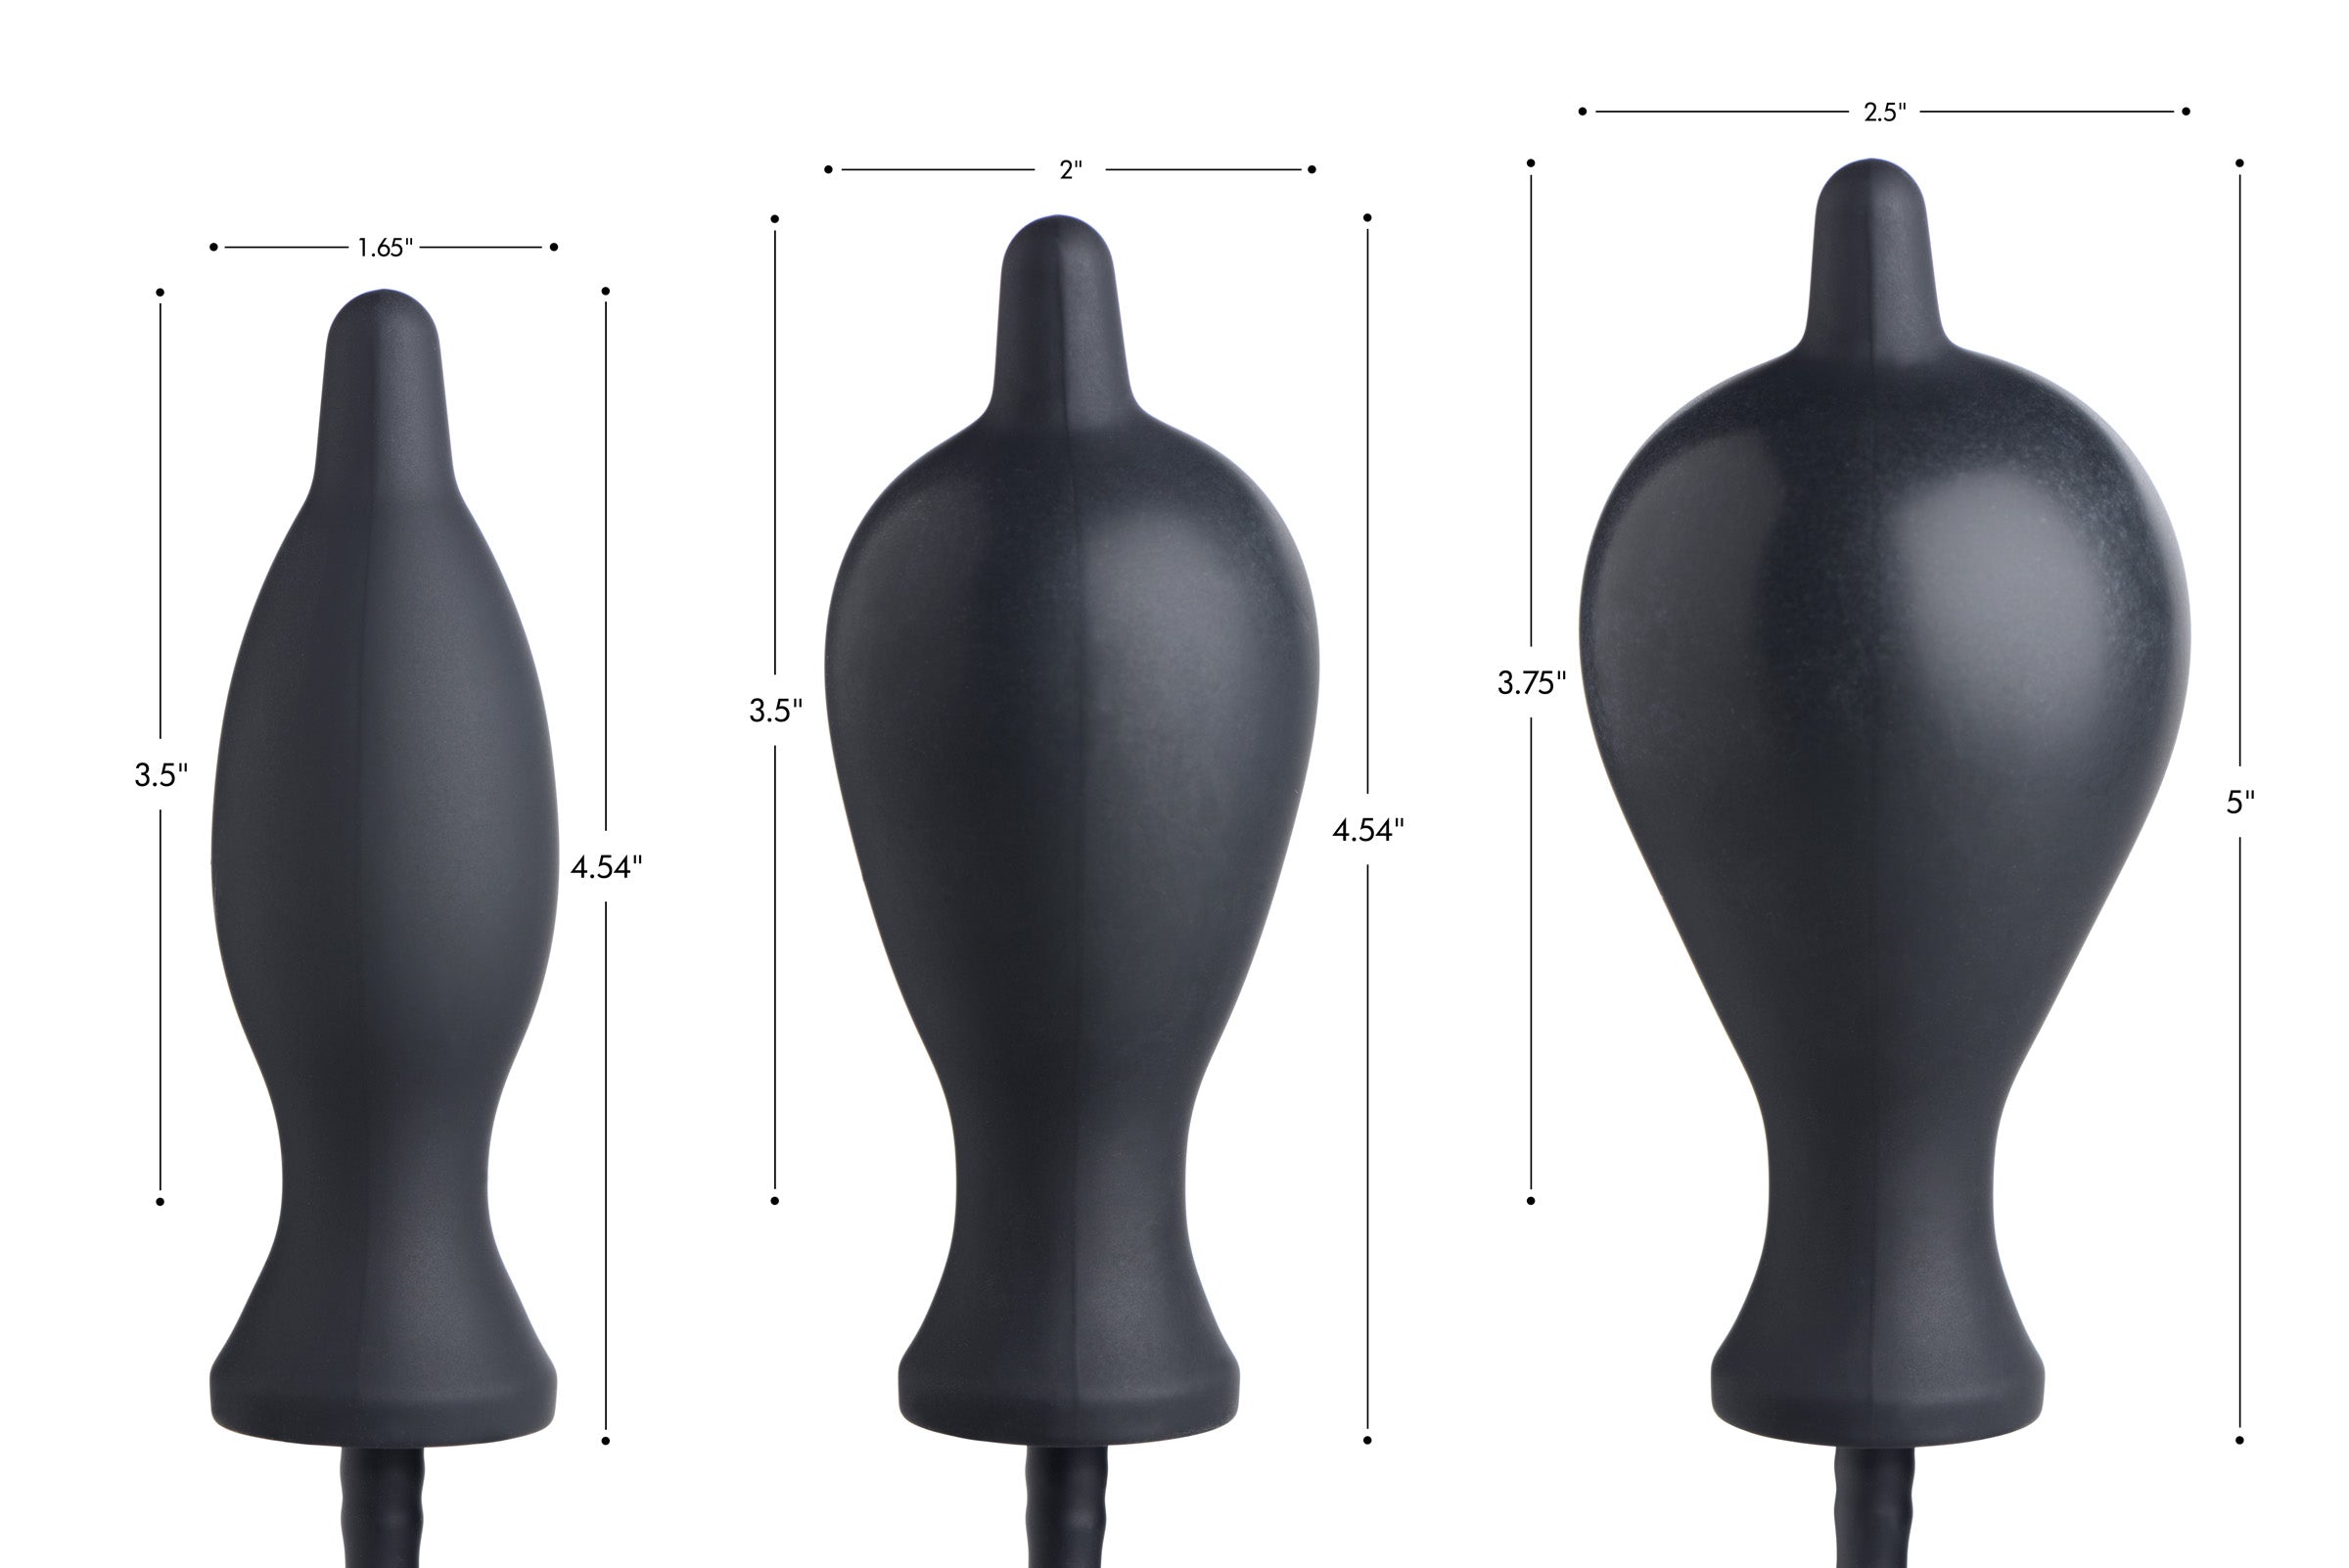 Dark Inflator Silicone Inflatable Anal Plug